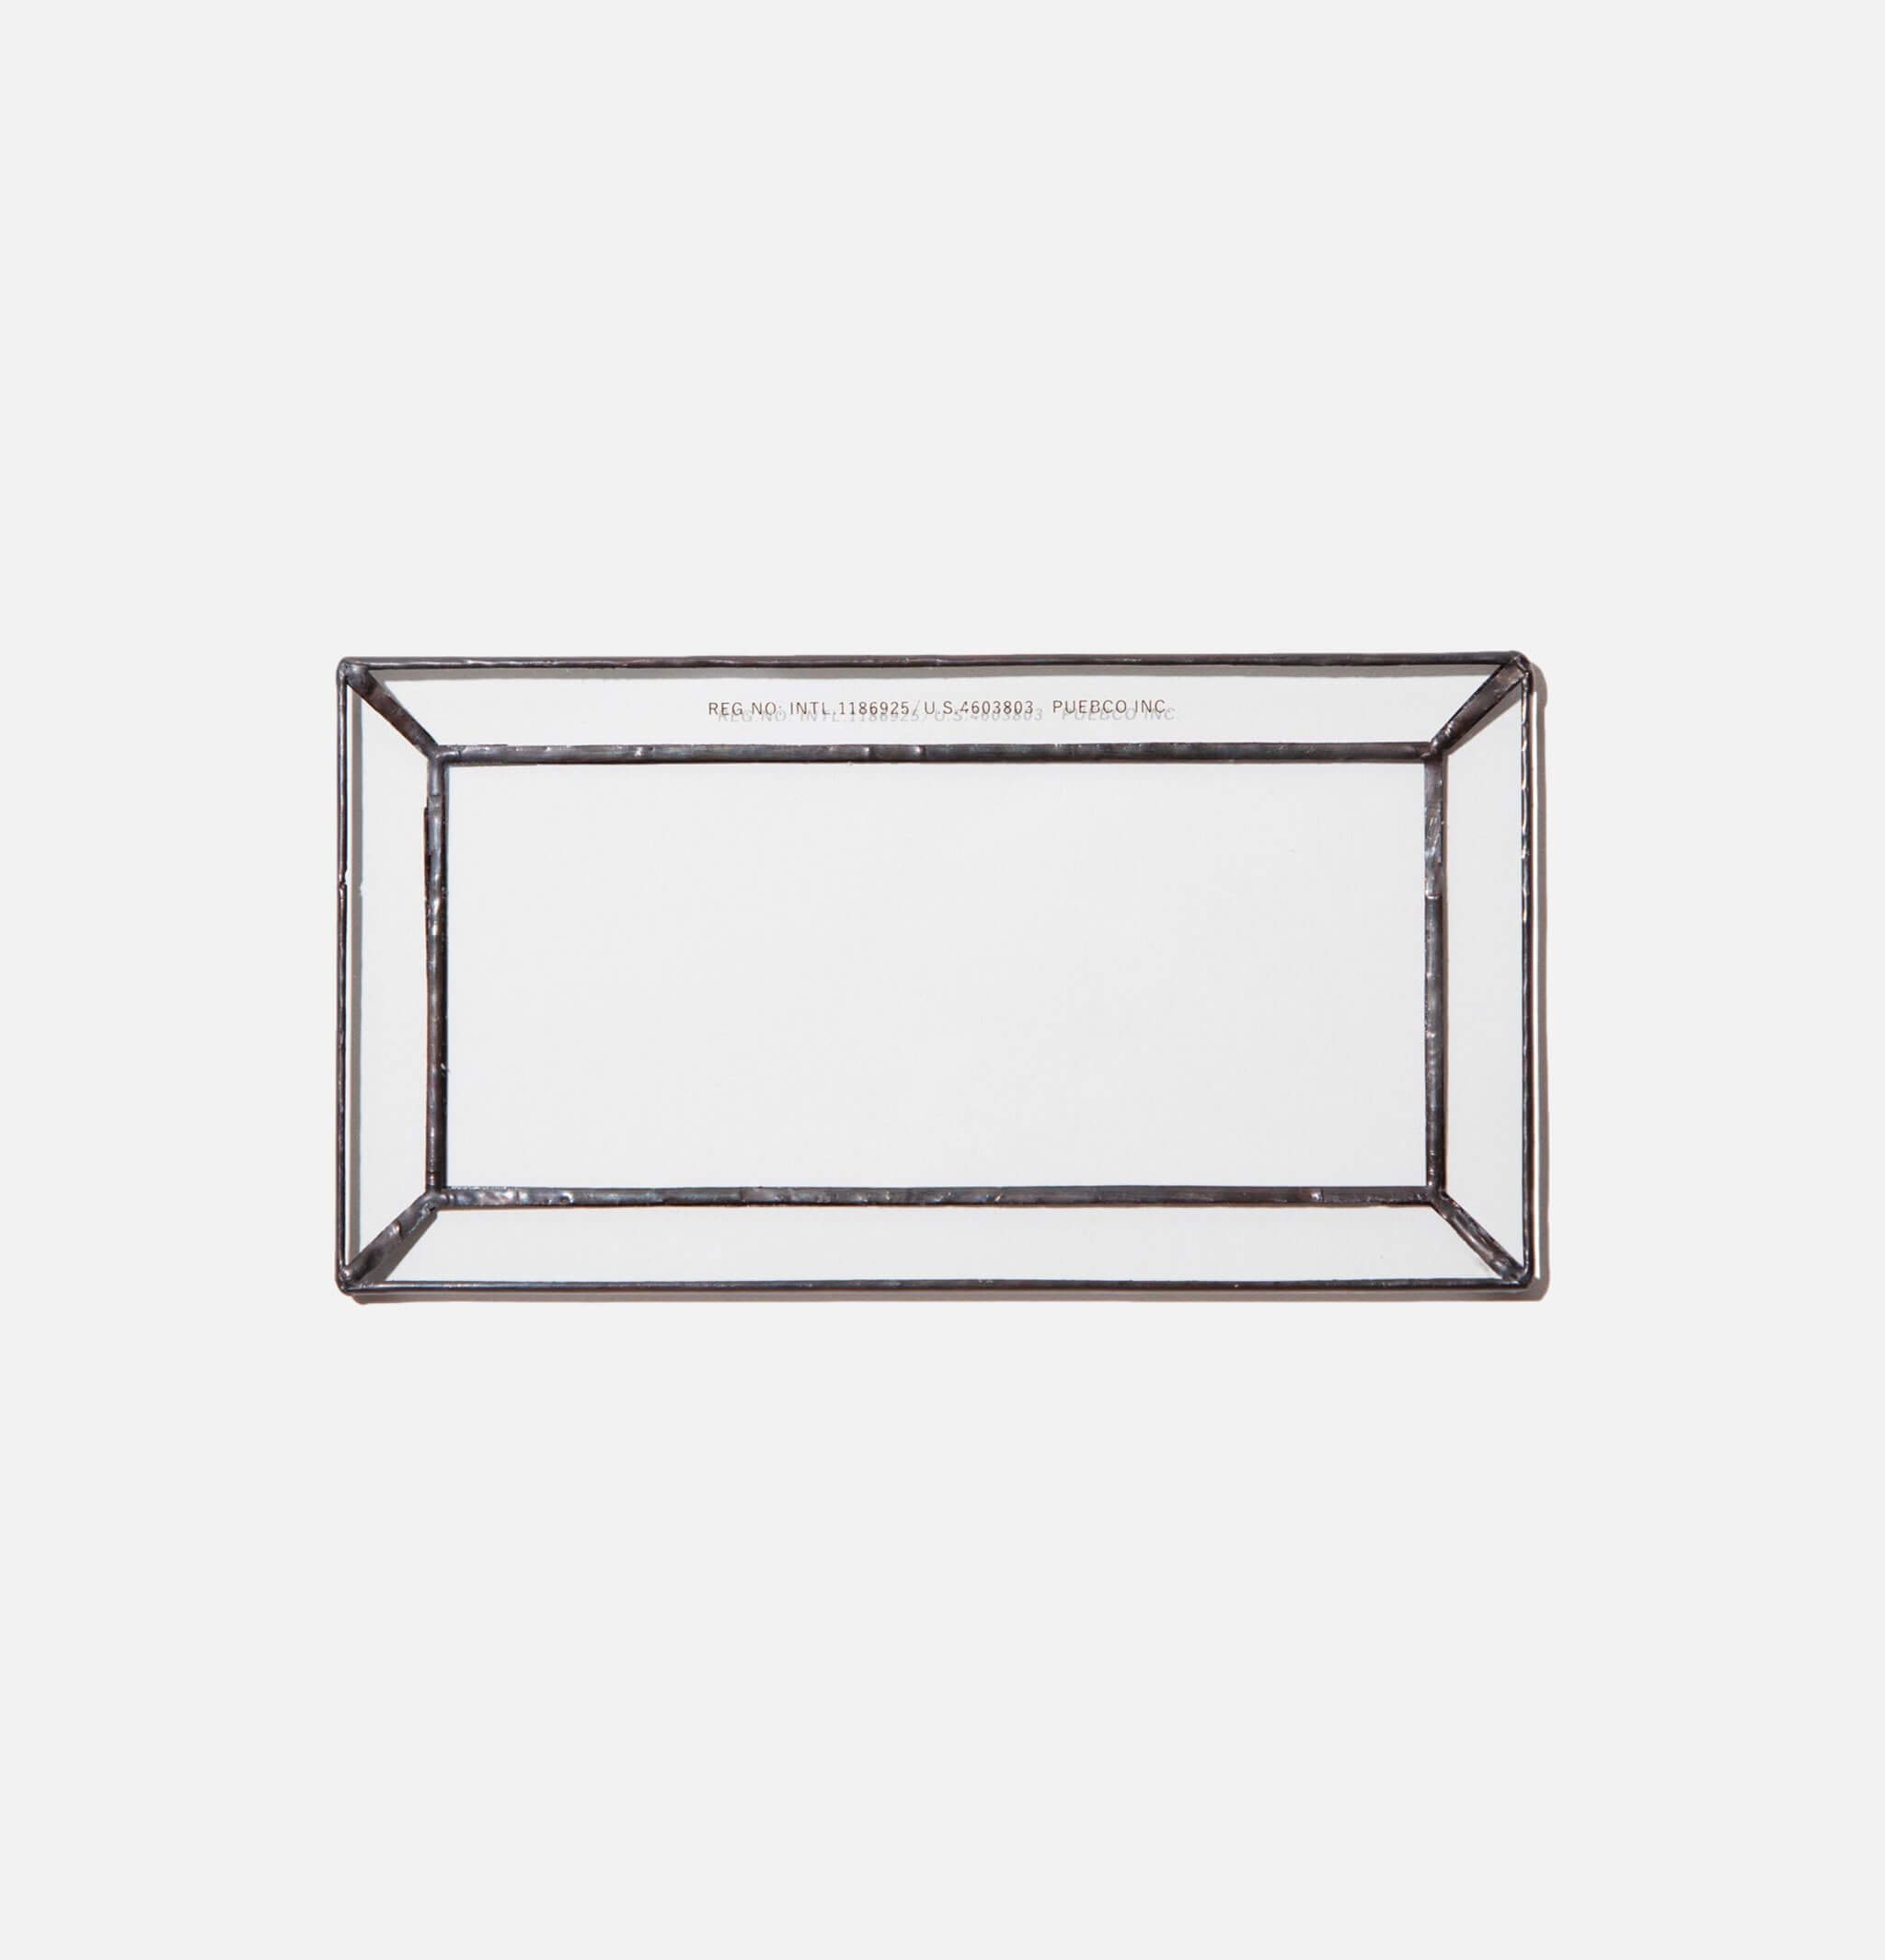 Glass Tray